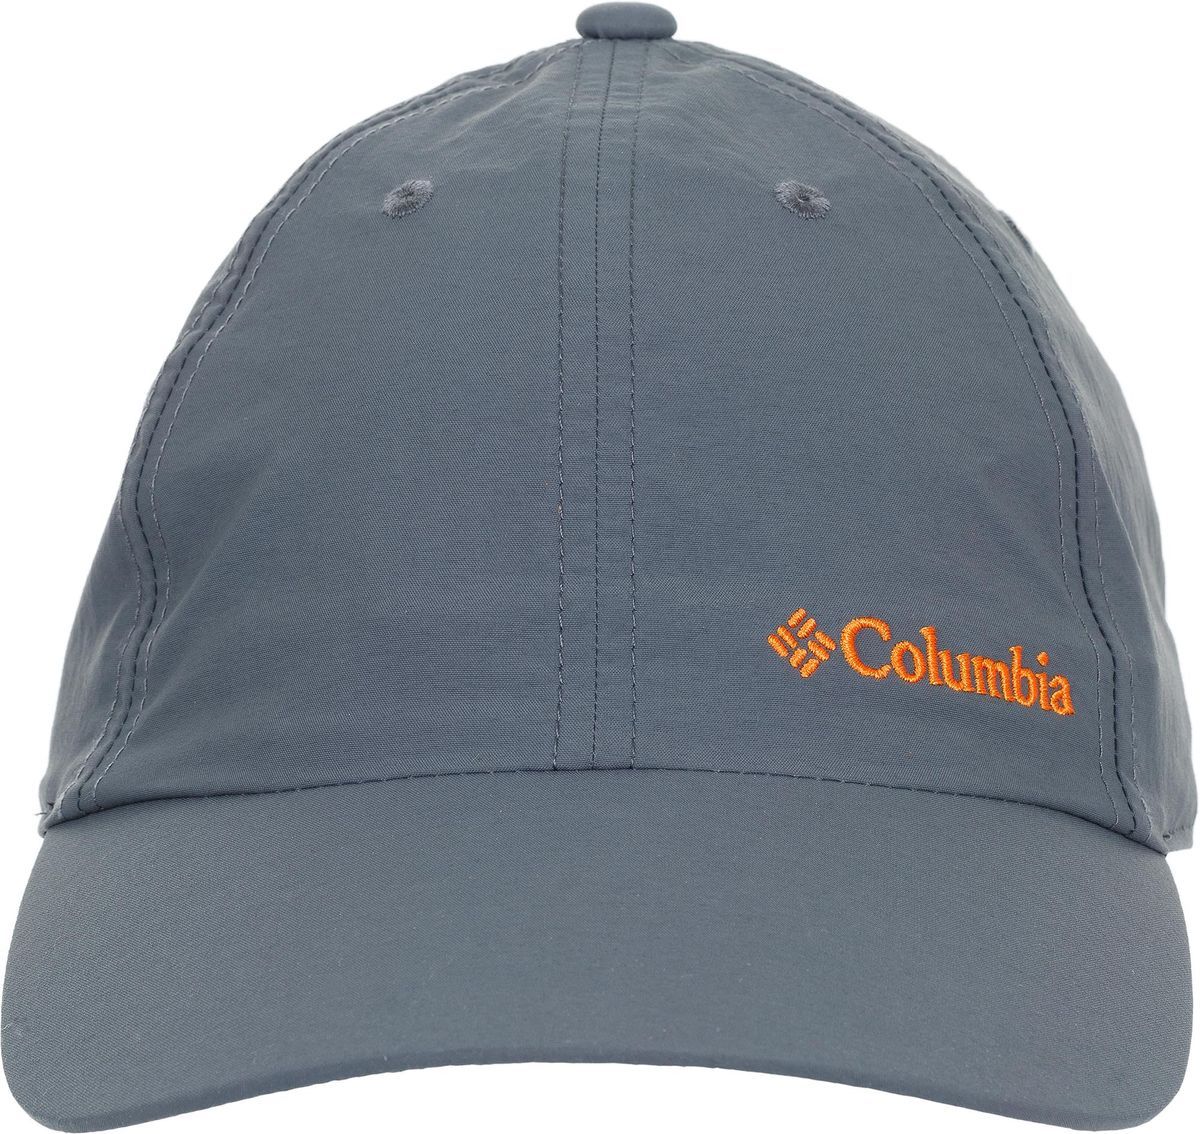  Columbia Tech Shade Ii Hat, : . 1819641-053.  